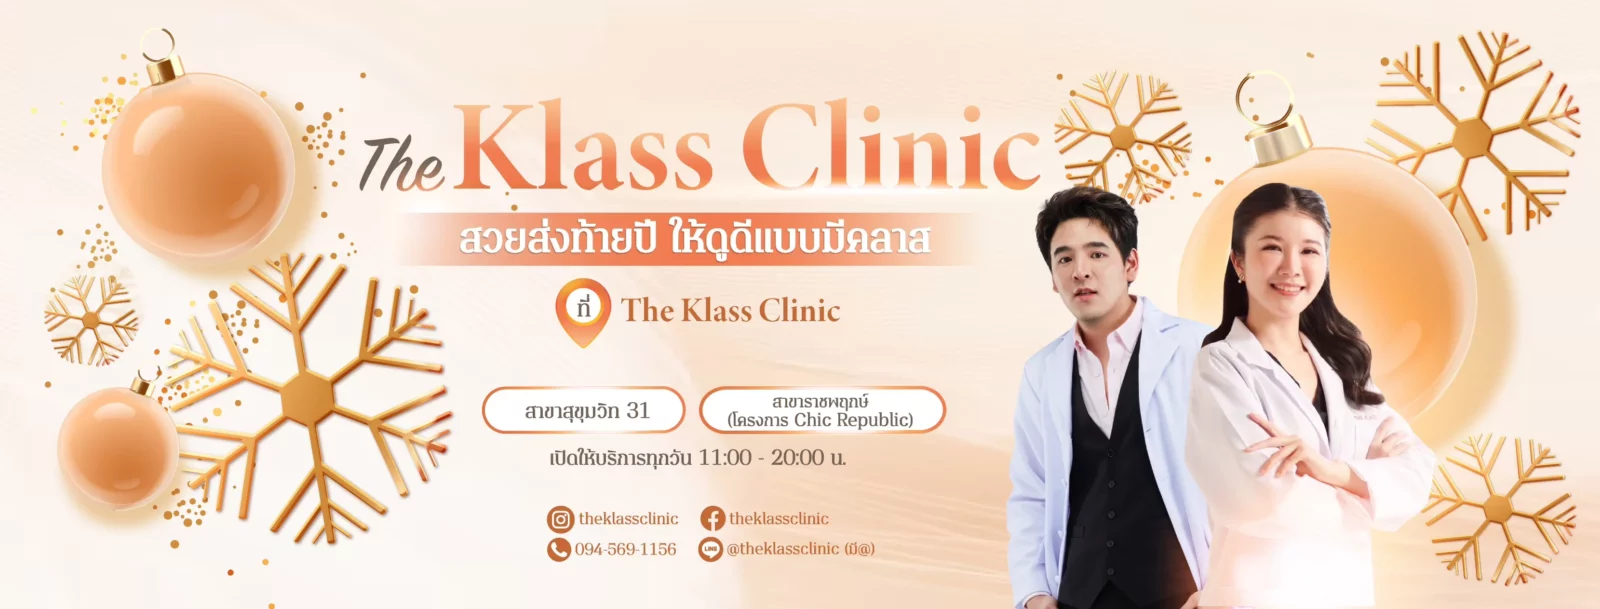 The Klass Clinic